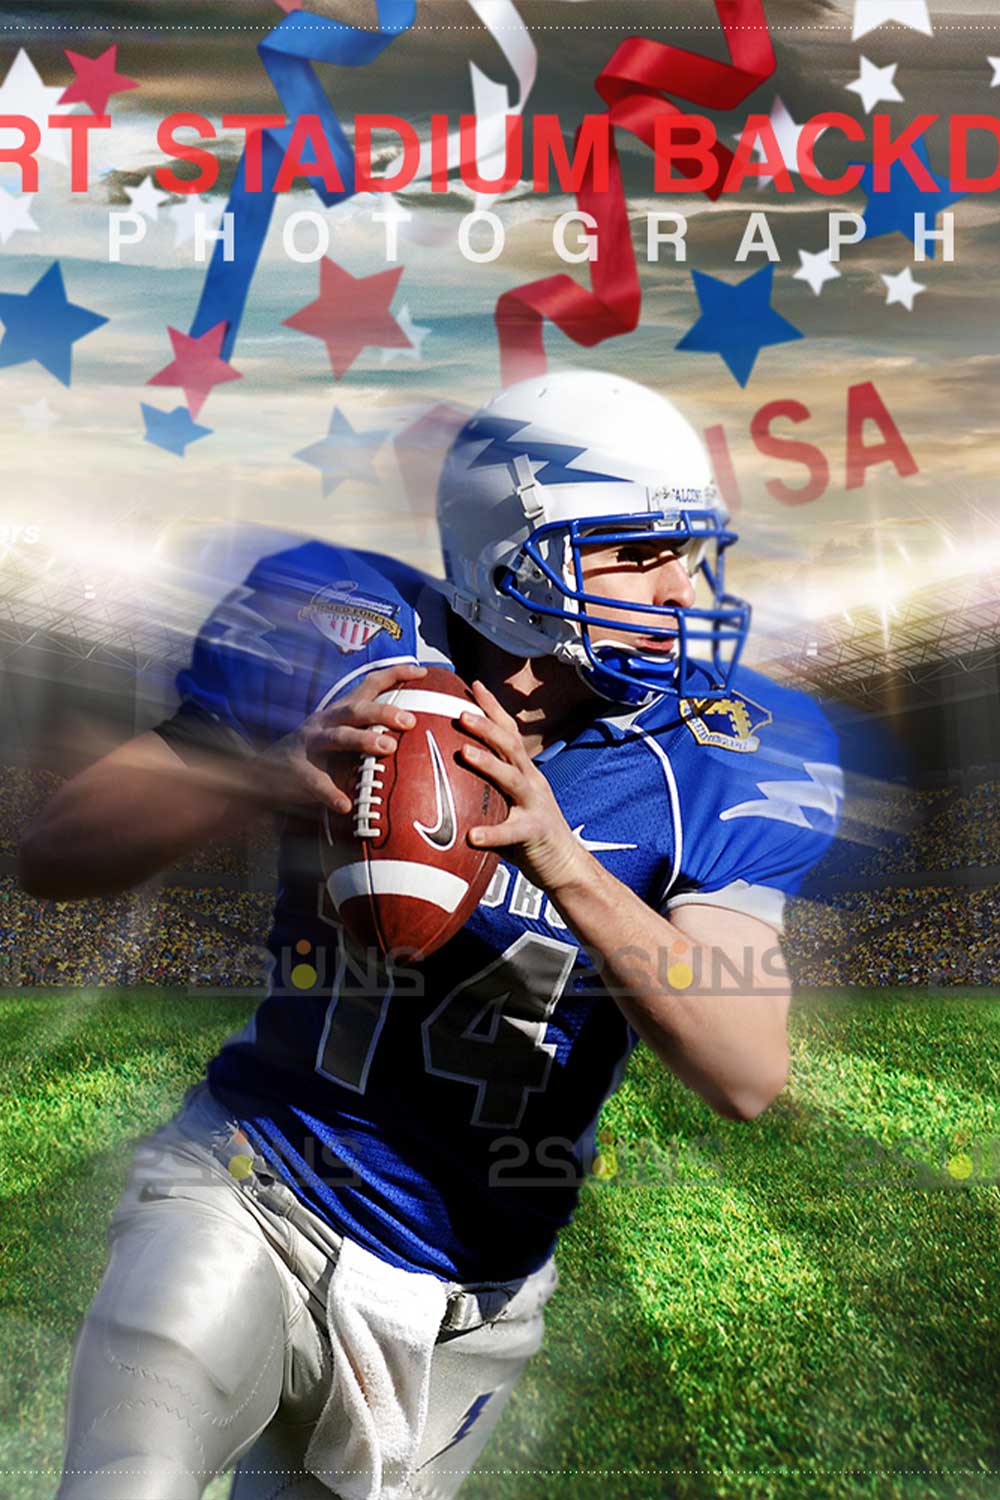 Beautiful Football Backdrop Sports Digital Photoshop Overlay Pinterest Image.